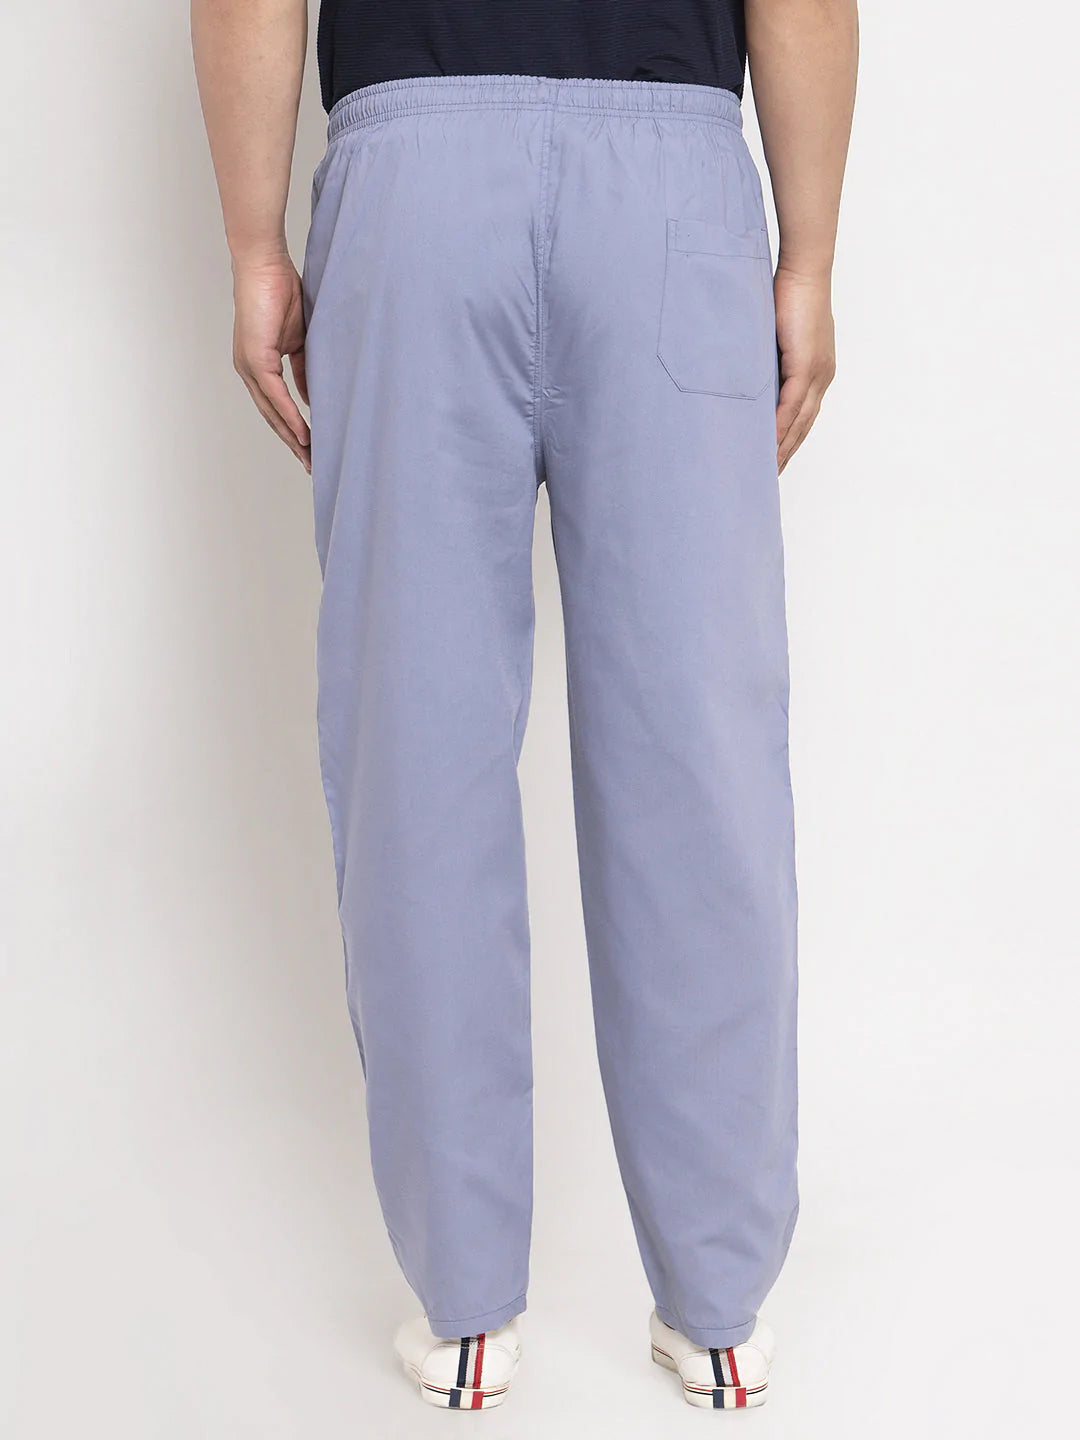 Jainish Men's Grey Solid Cotton Track Pants ( JOG 011Light-Grey )